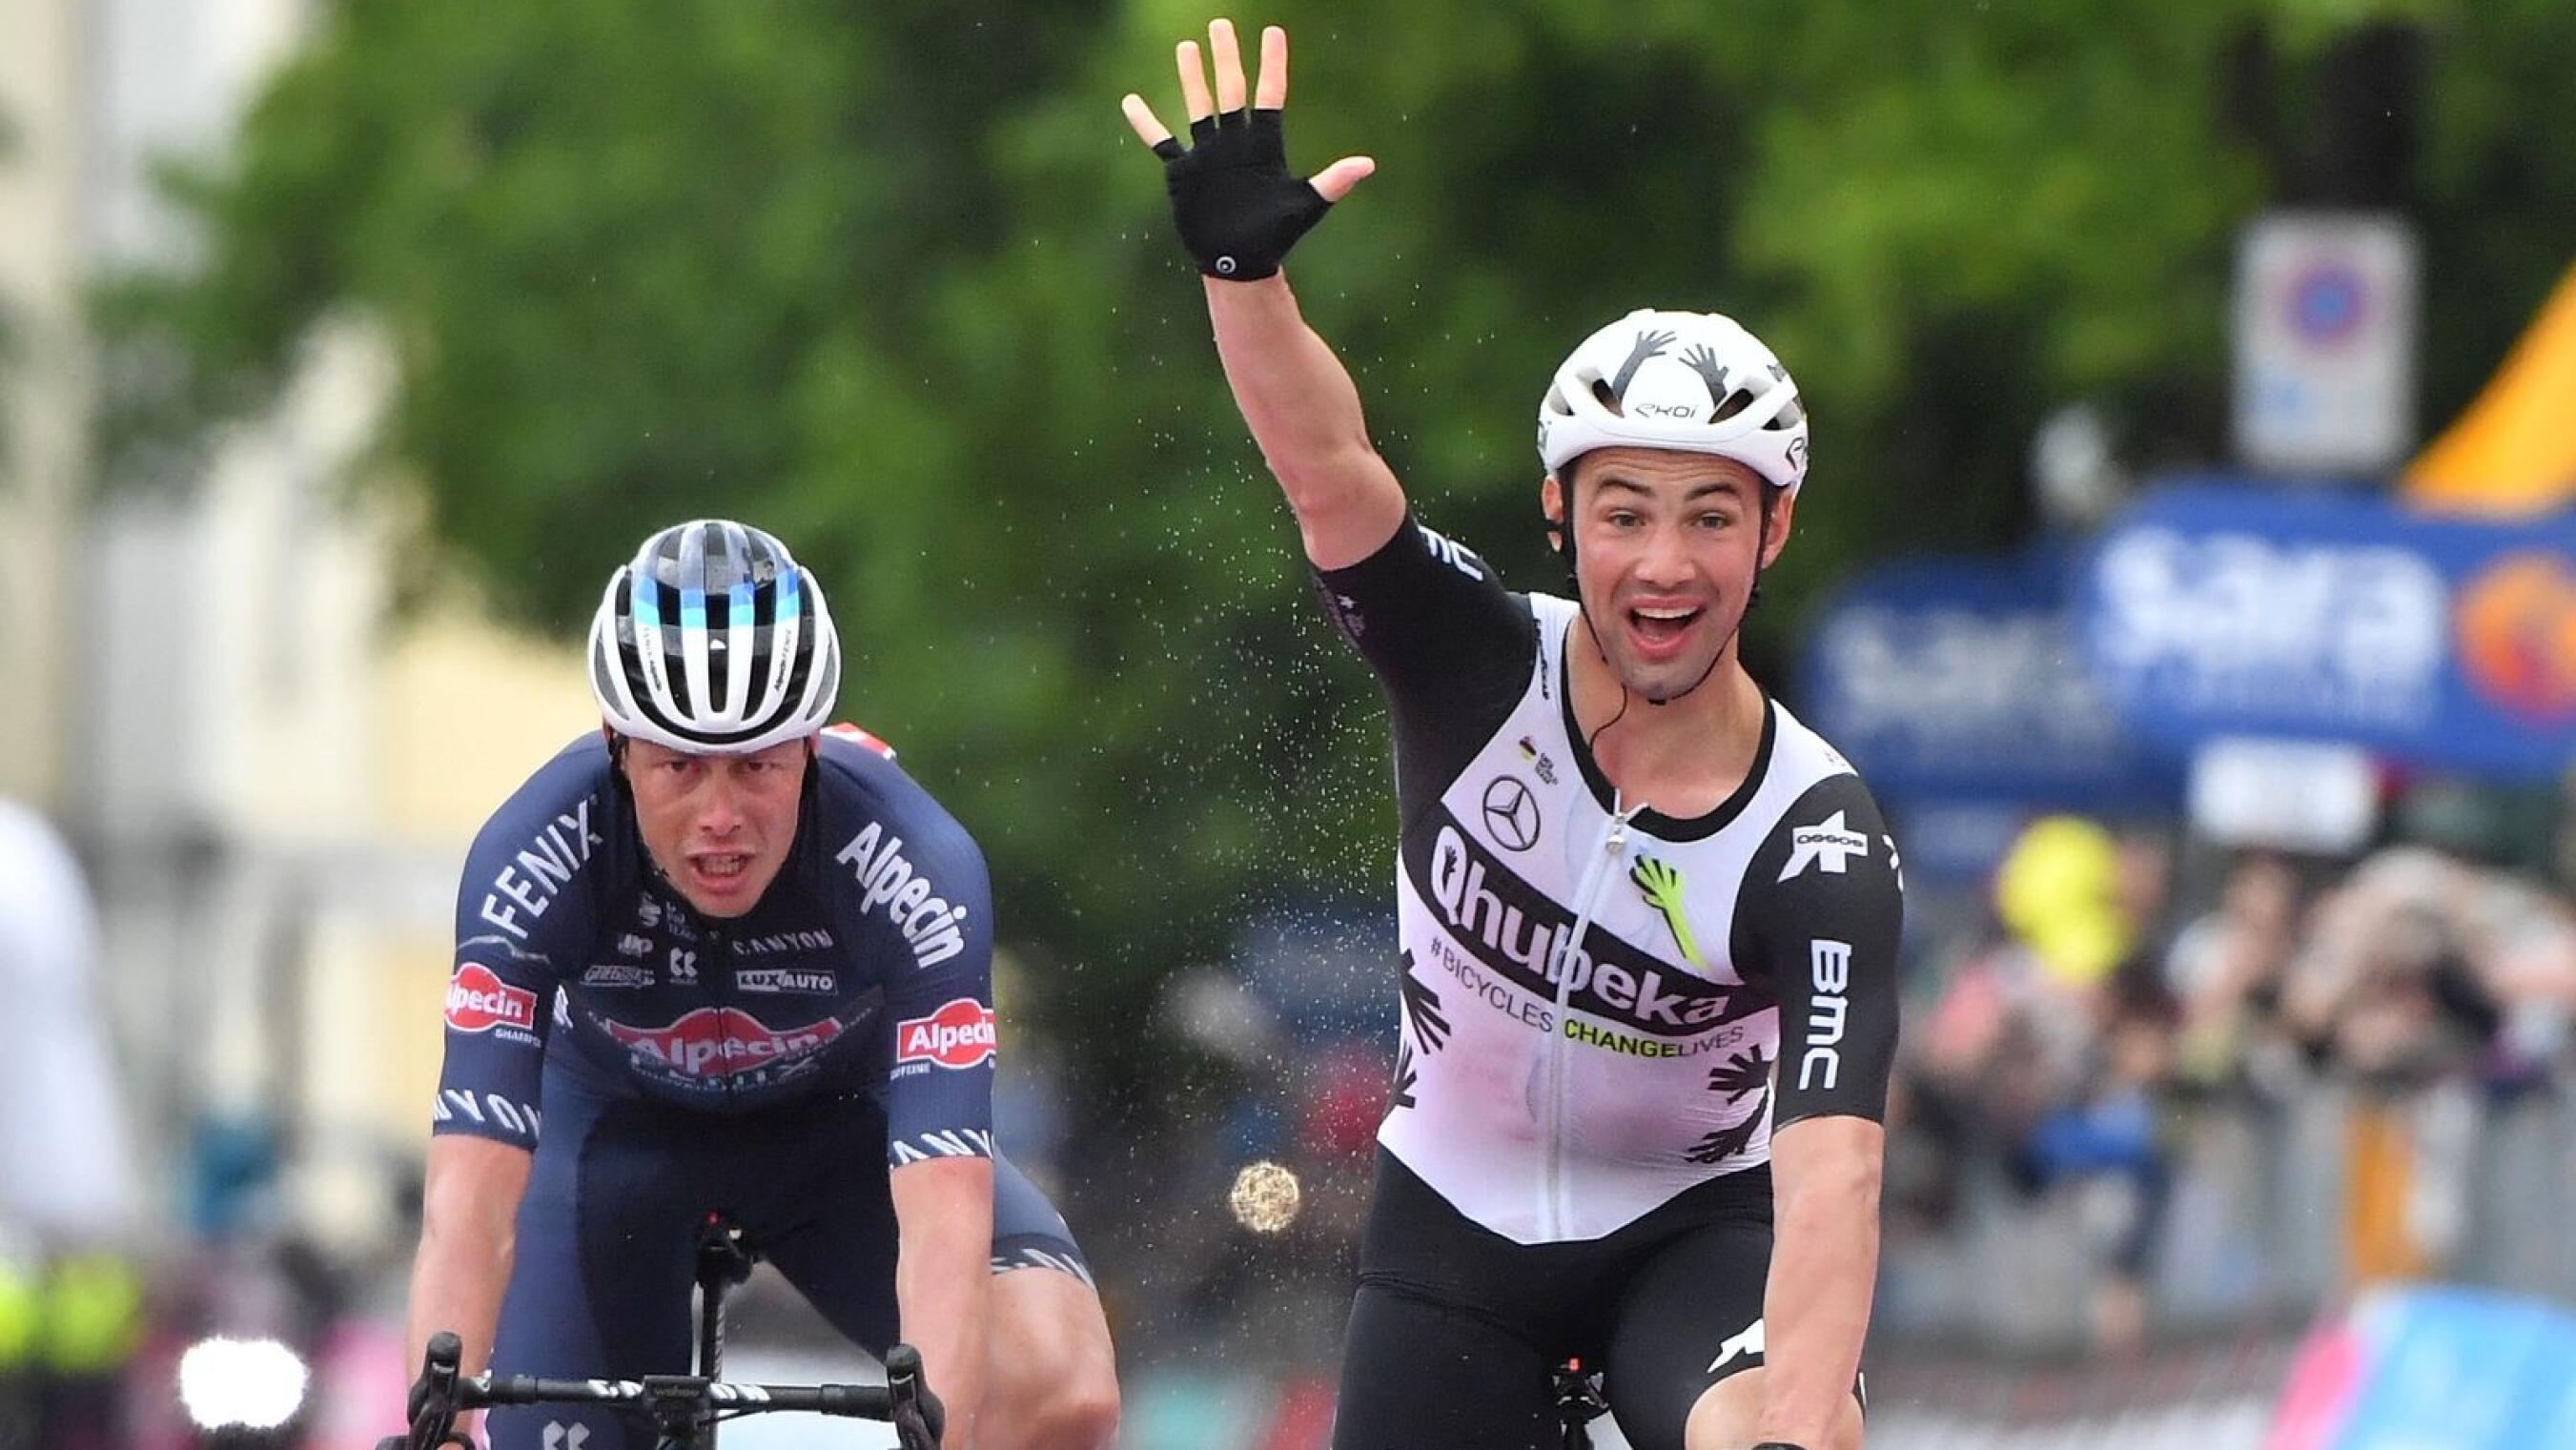 Qhubeka Assos rider Victor Campenaerts of Belgium celebrates winning stage 15 ahead of Alpecin-Fenix rider Oscar Riesebeek of Netherlands